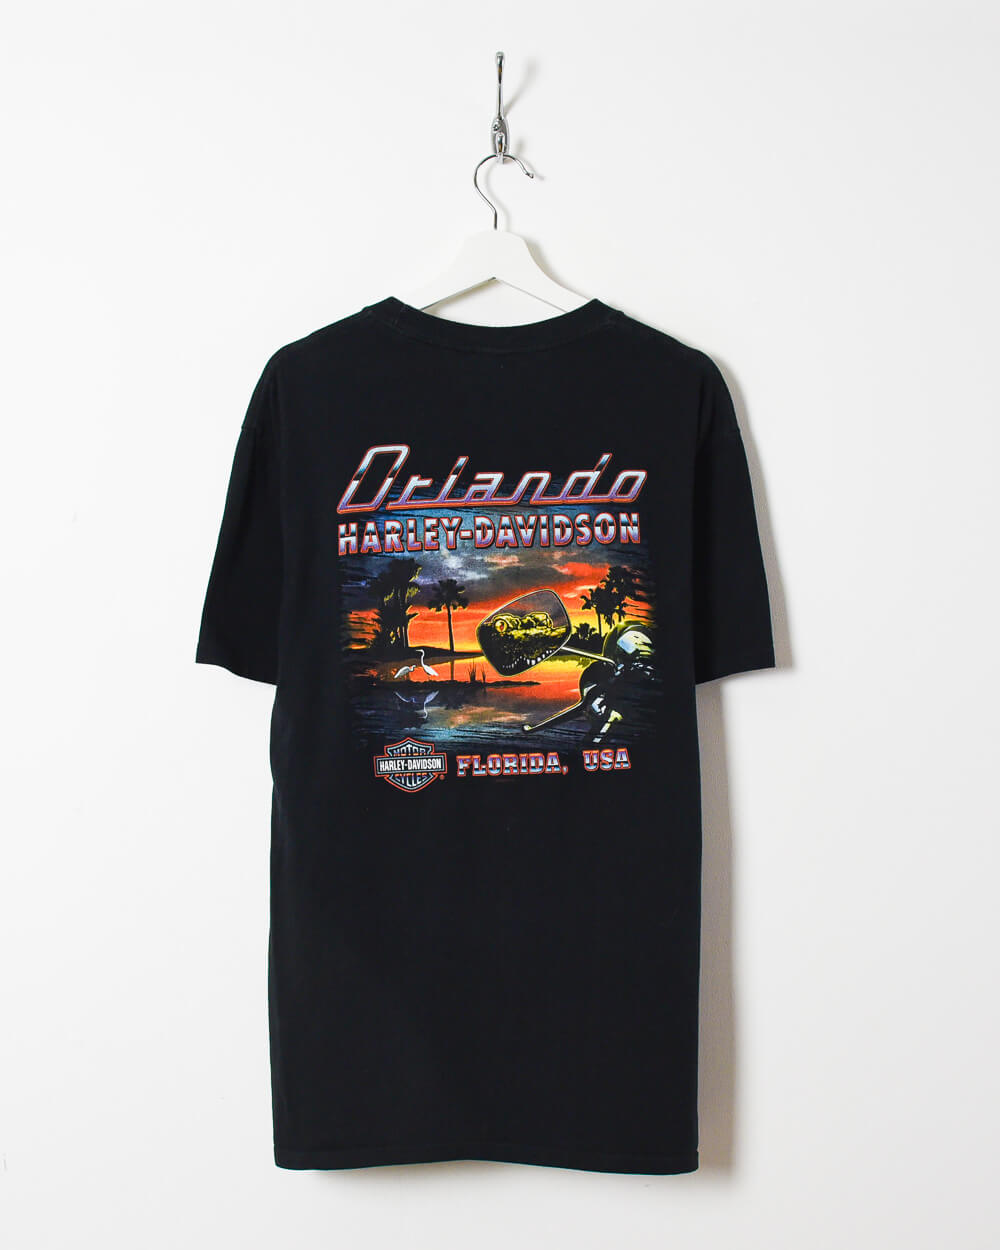 Black Harley-Davidson Motor Cycles World Class Orlando Florida USA T-Shirt - Large